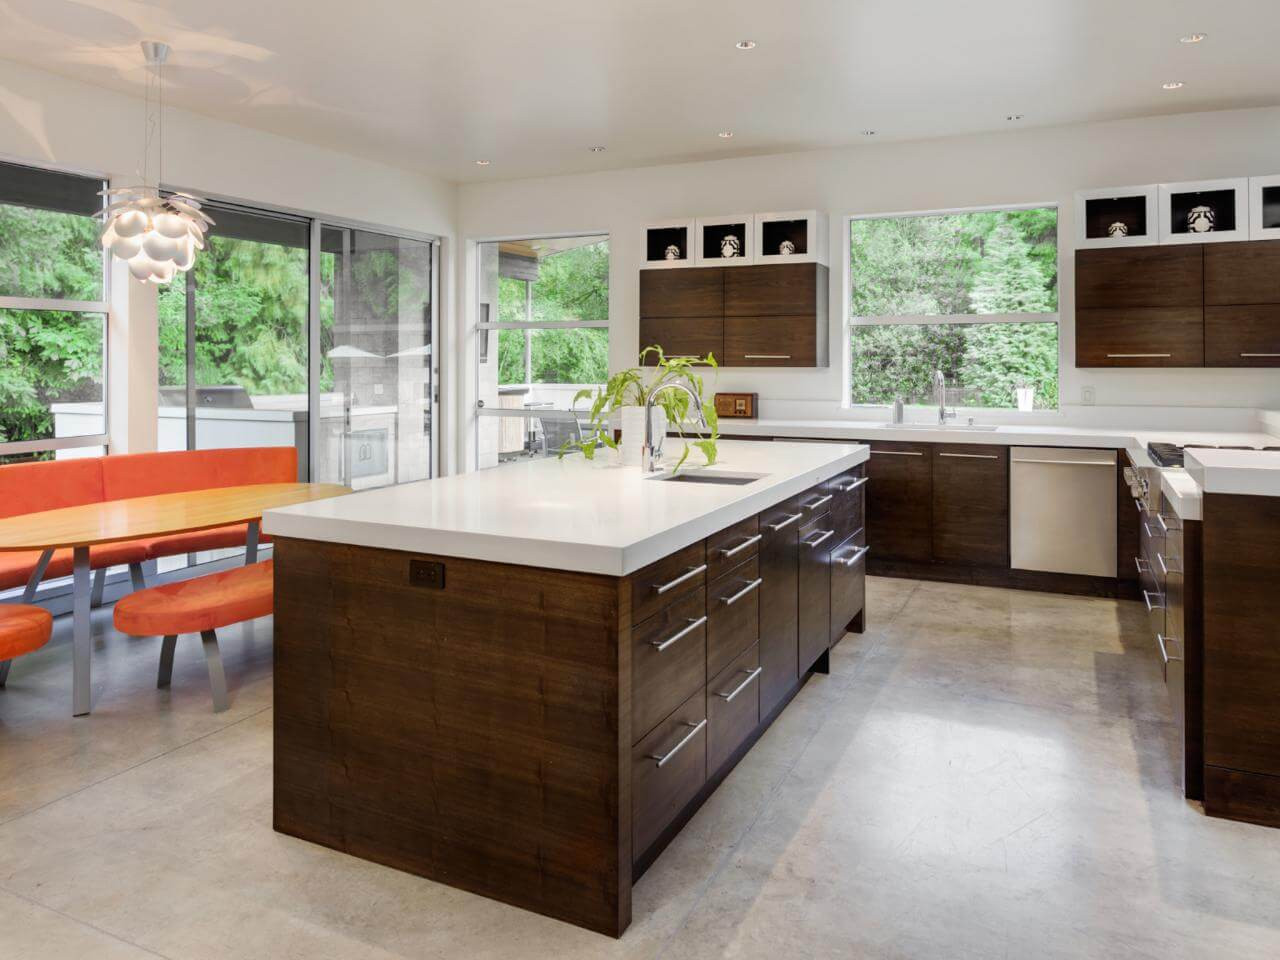 Ceramic Kitchen Tile
 20 Best Kitchen Tile Floor Ideas for Your Home